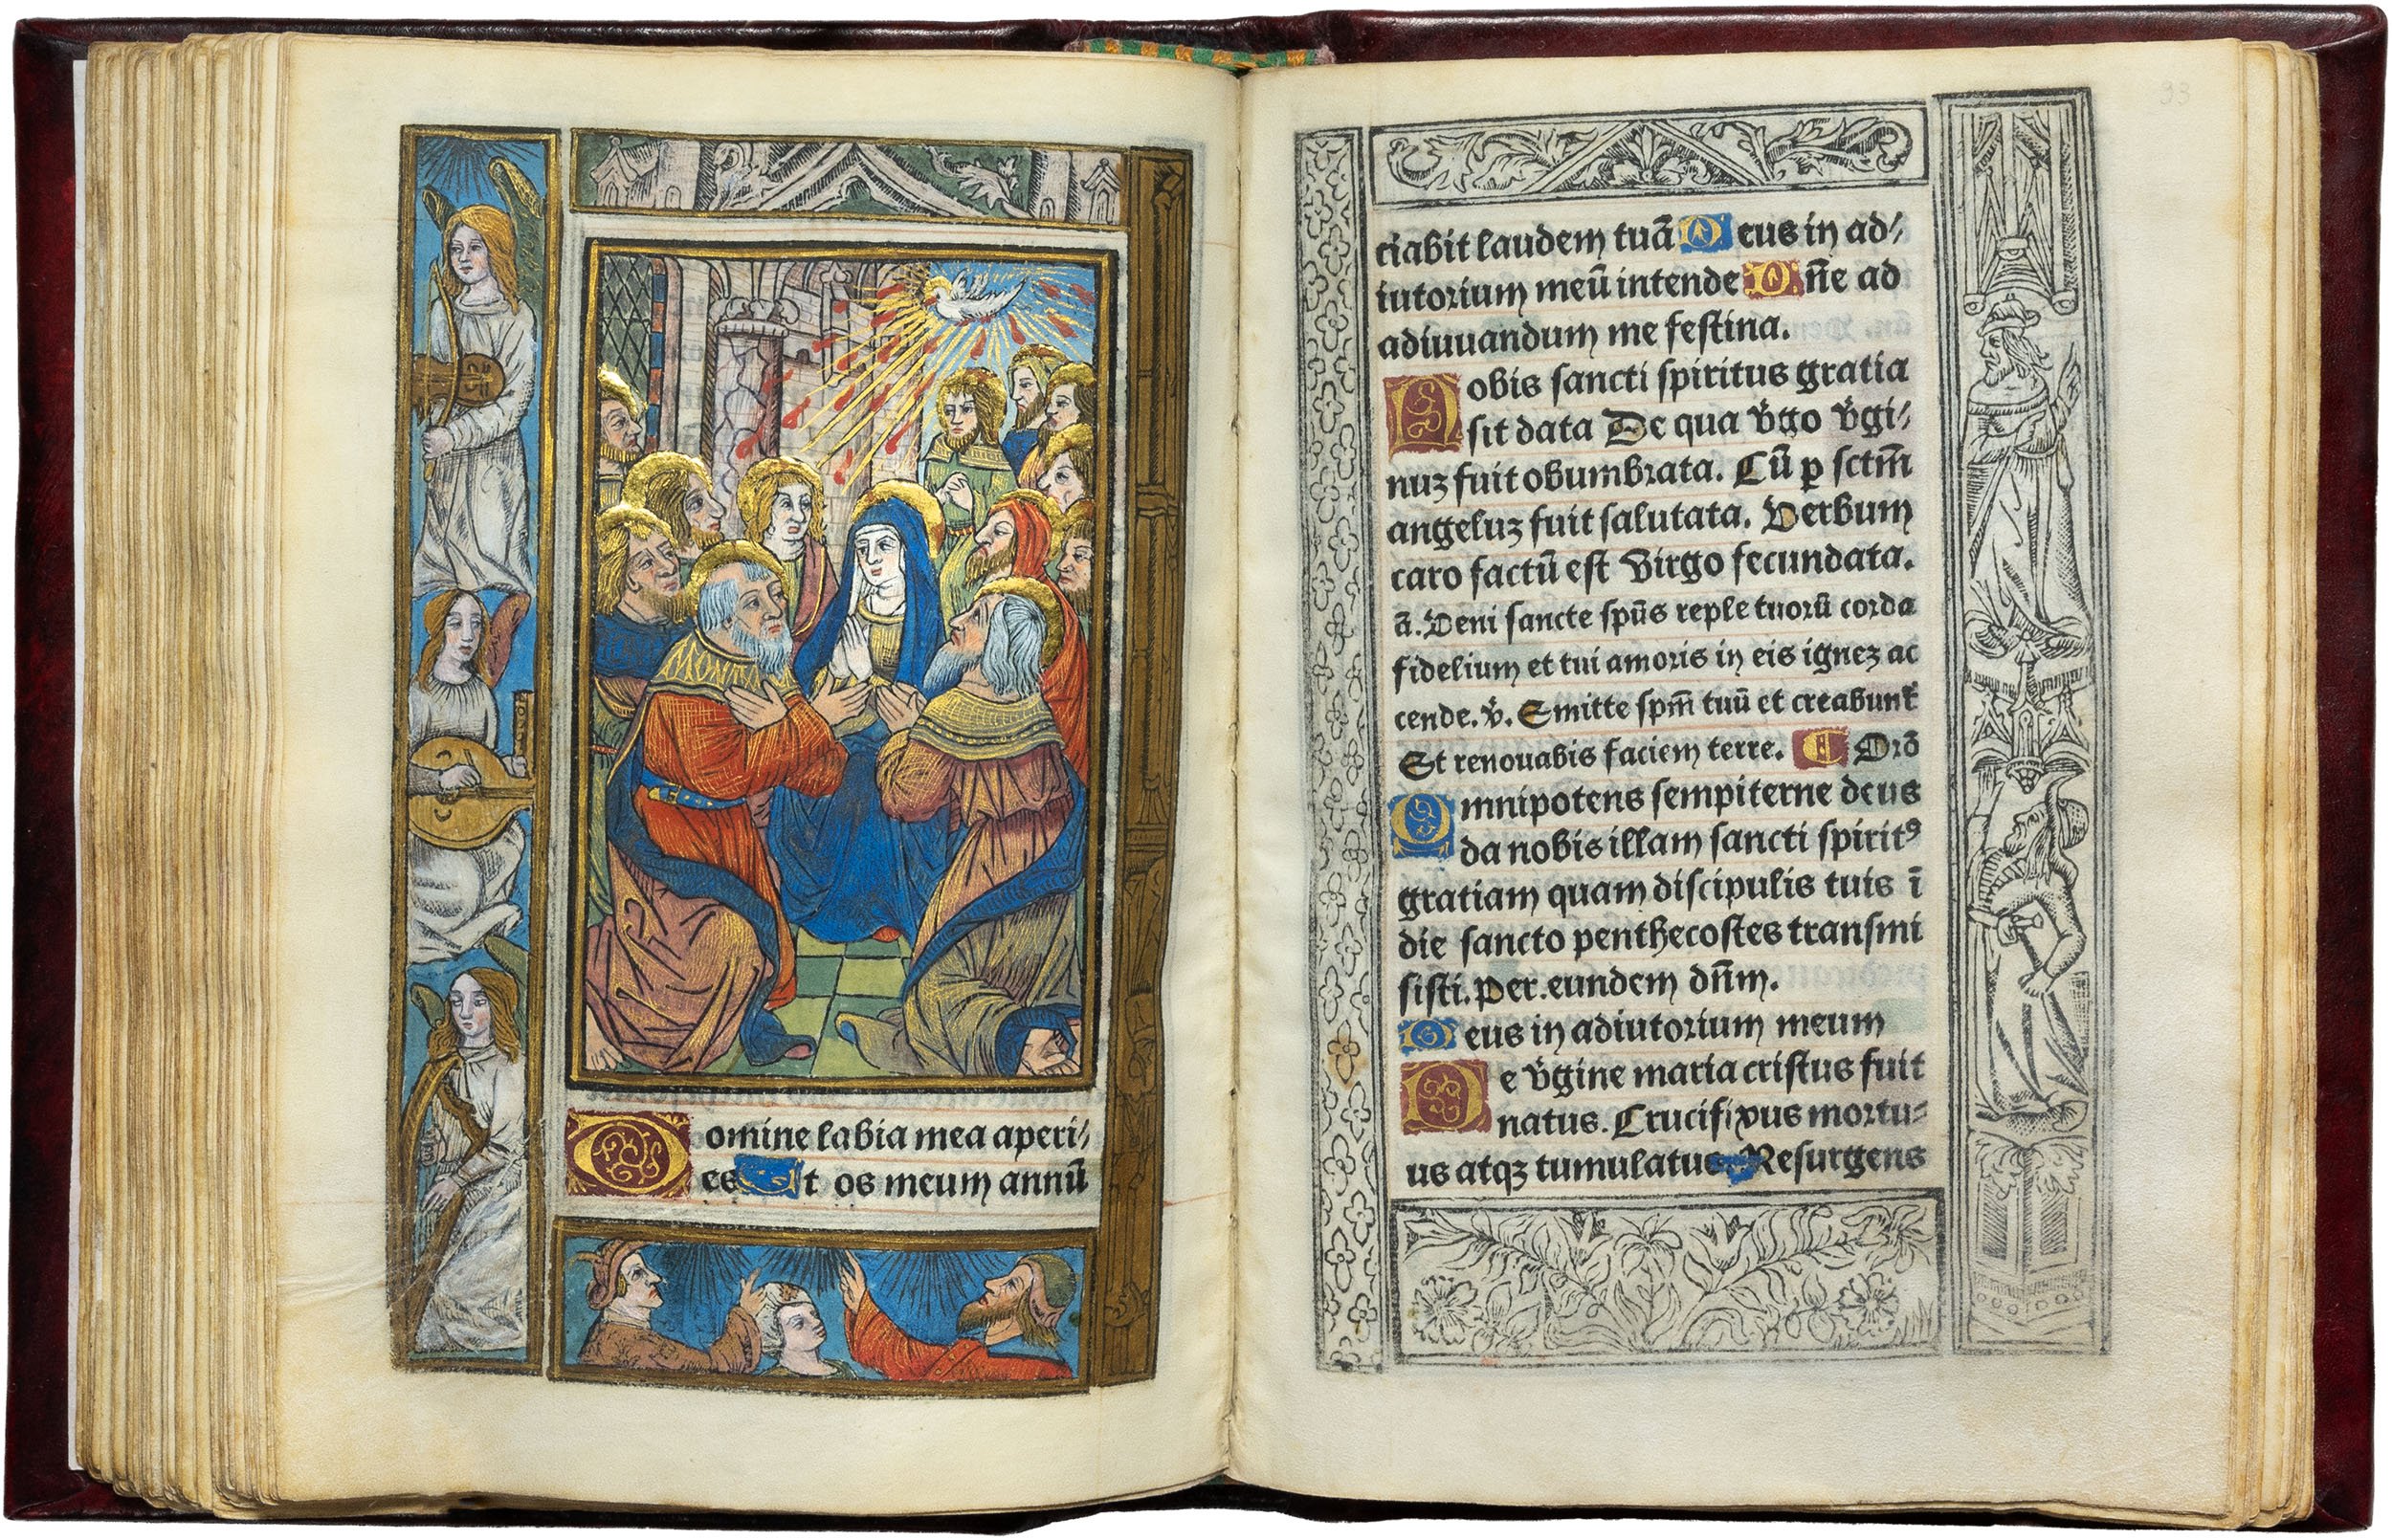 horae-bmv-early-printed-book-of-hours-1487-dupre-94.jpg